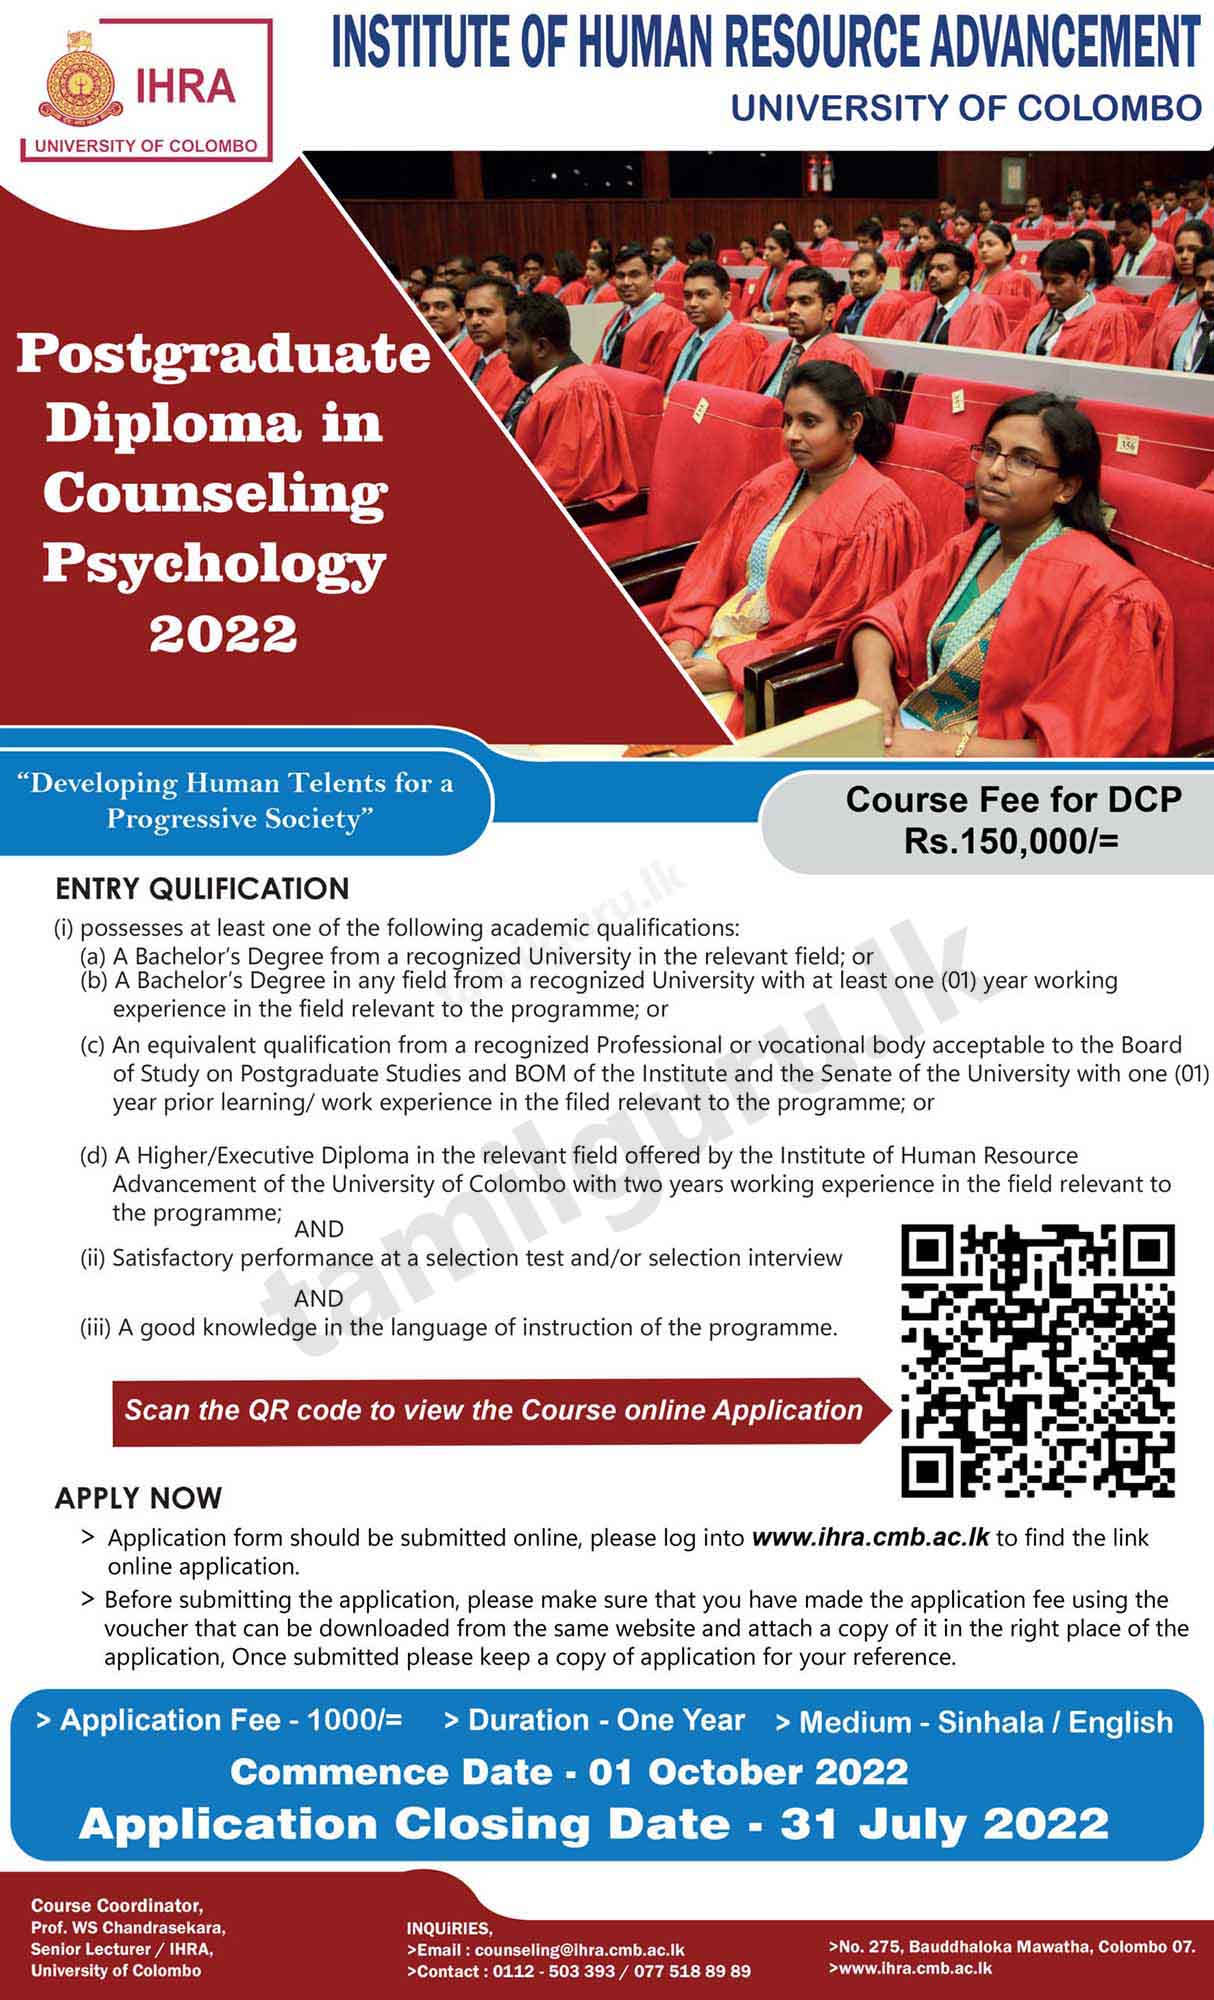 Postgraduate Diploma in Counseling Psychology (PGDCP) (2022 July) - University of Colombo